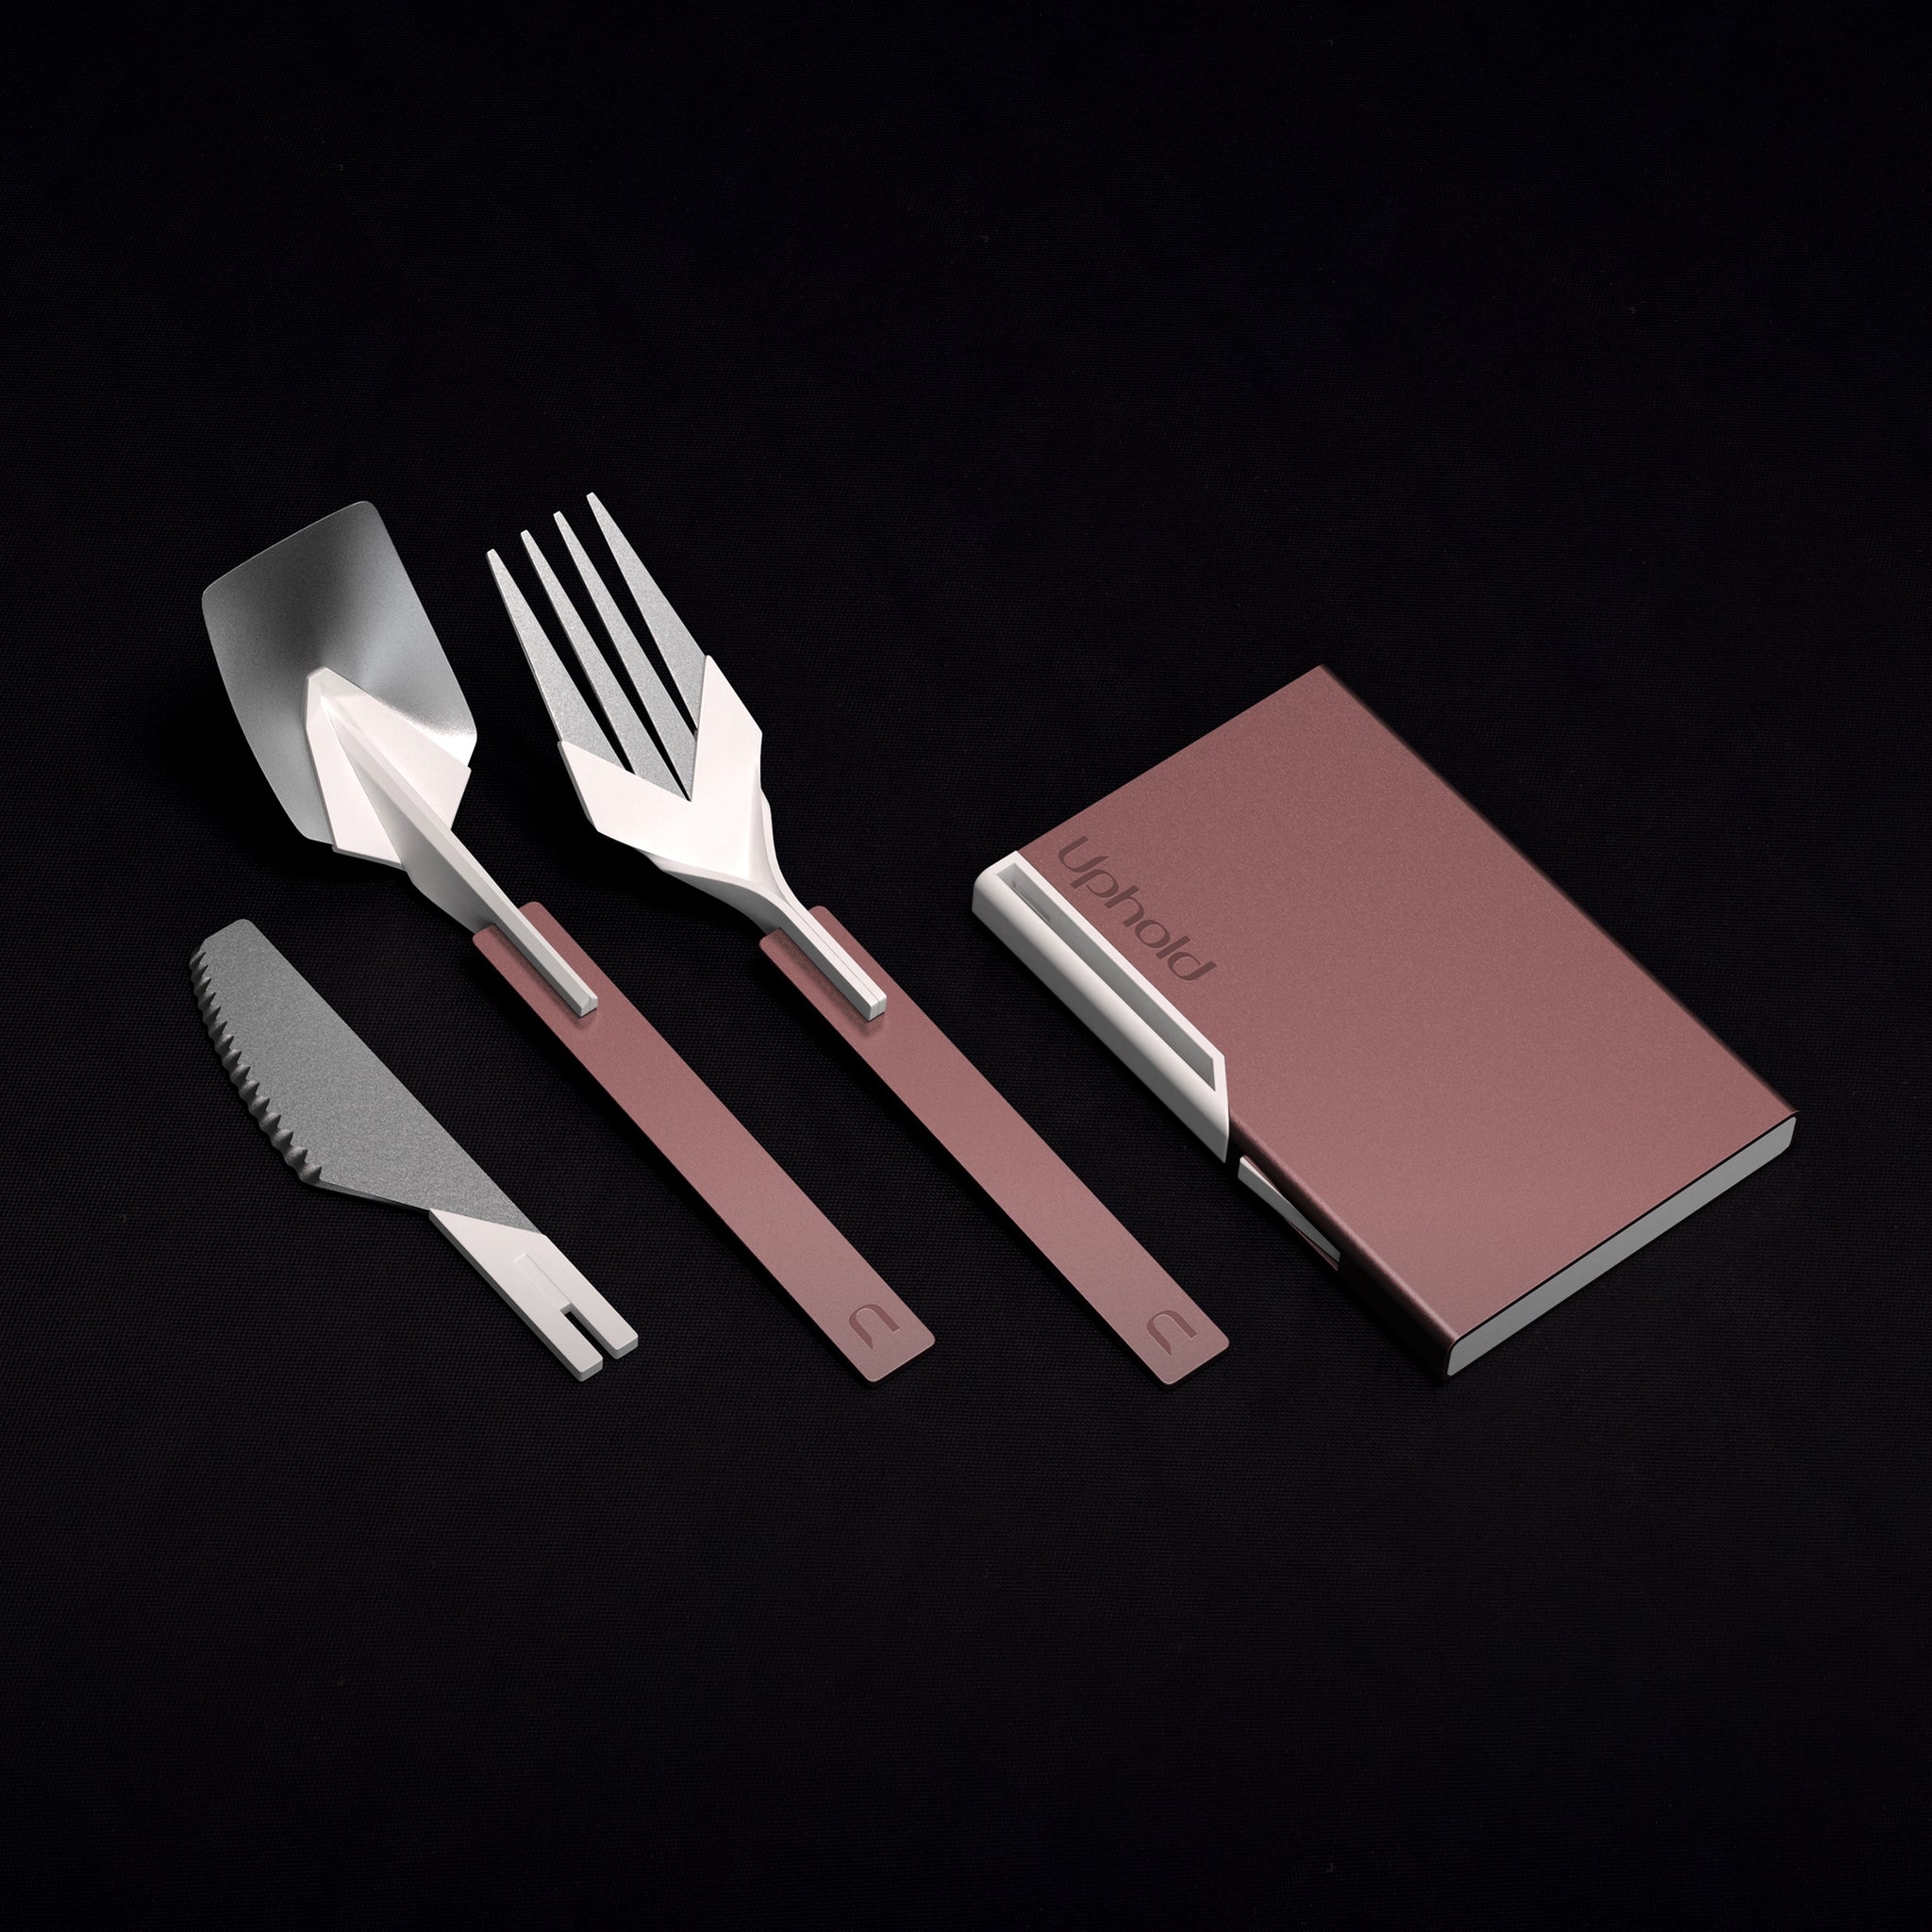 Uphold Cutlery Compact 隨行餐具 袖珍版 (Rosegold 玫瑰金) [Folding Travel Cutlery/Collapsible Pocket Utensils 折疊旅行便攜餐具]